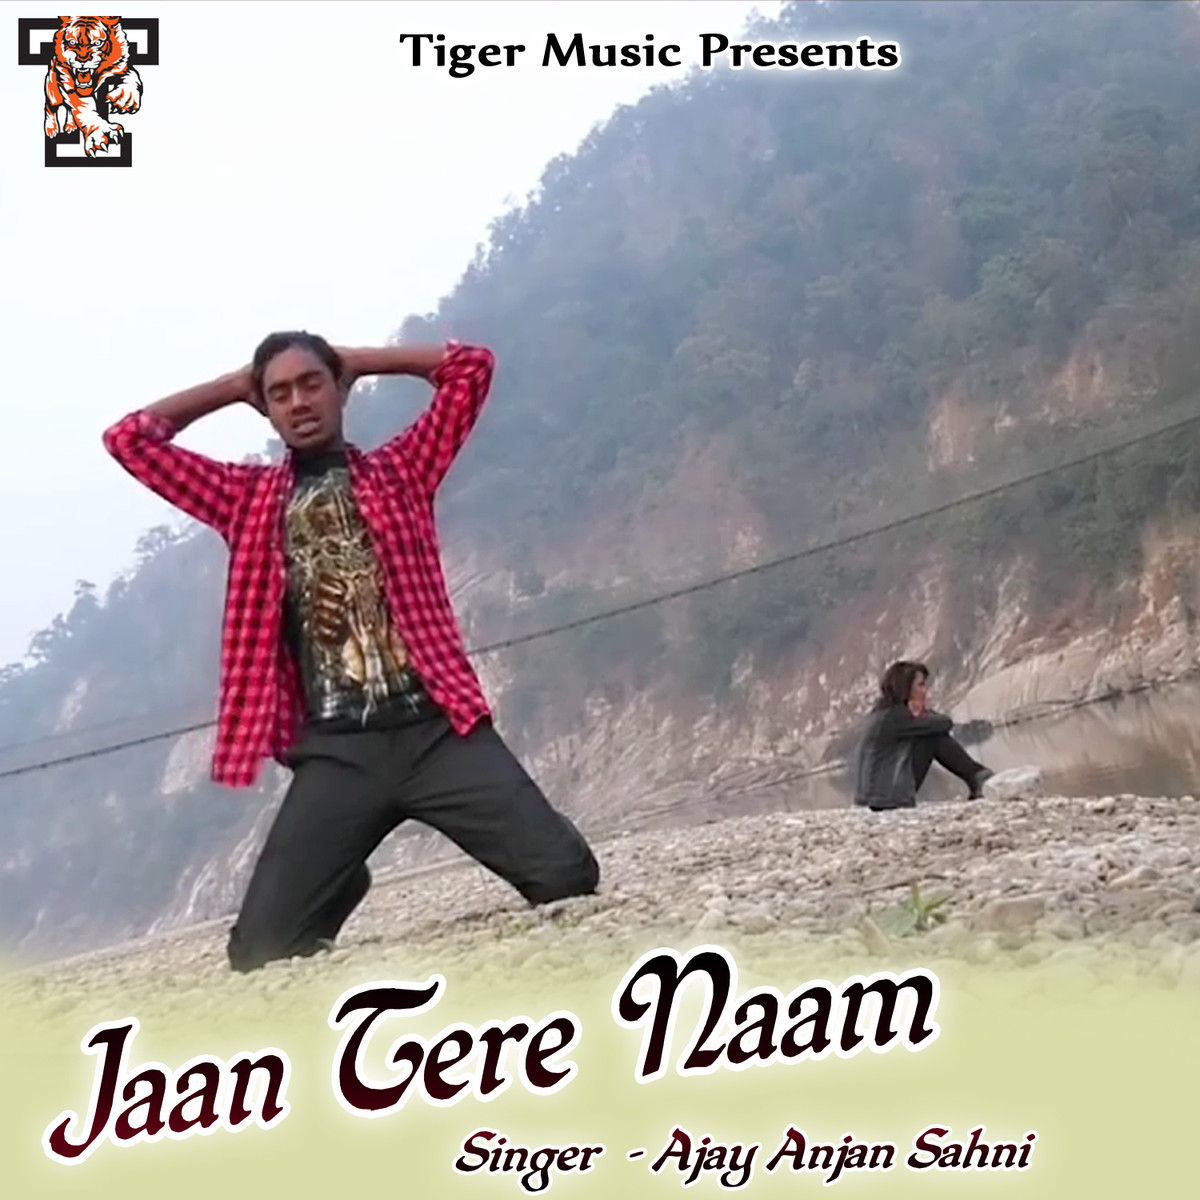 Jaan Tere Naam Full Hd Video Song Download